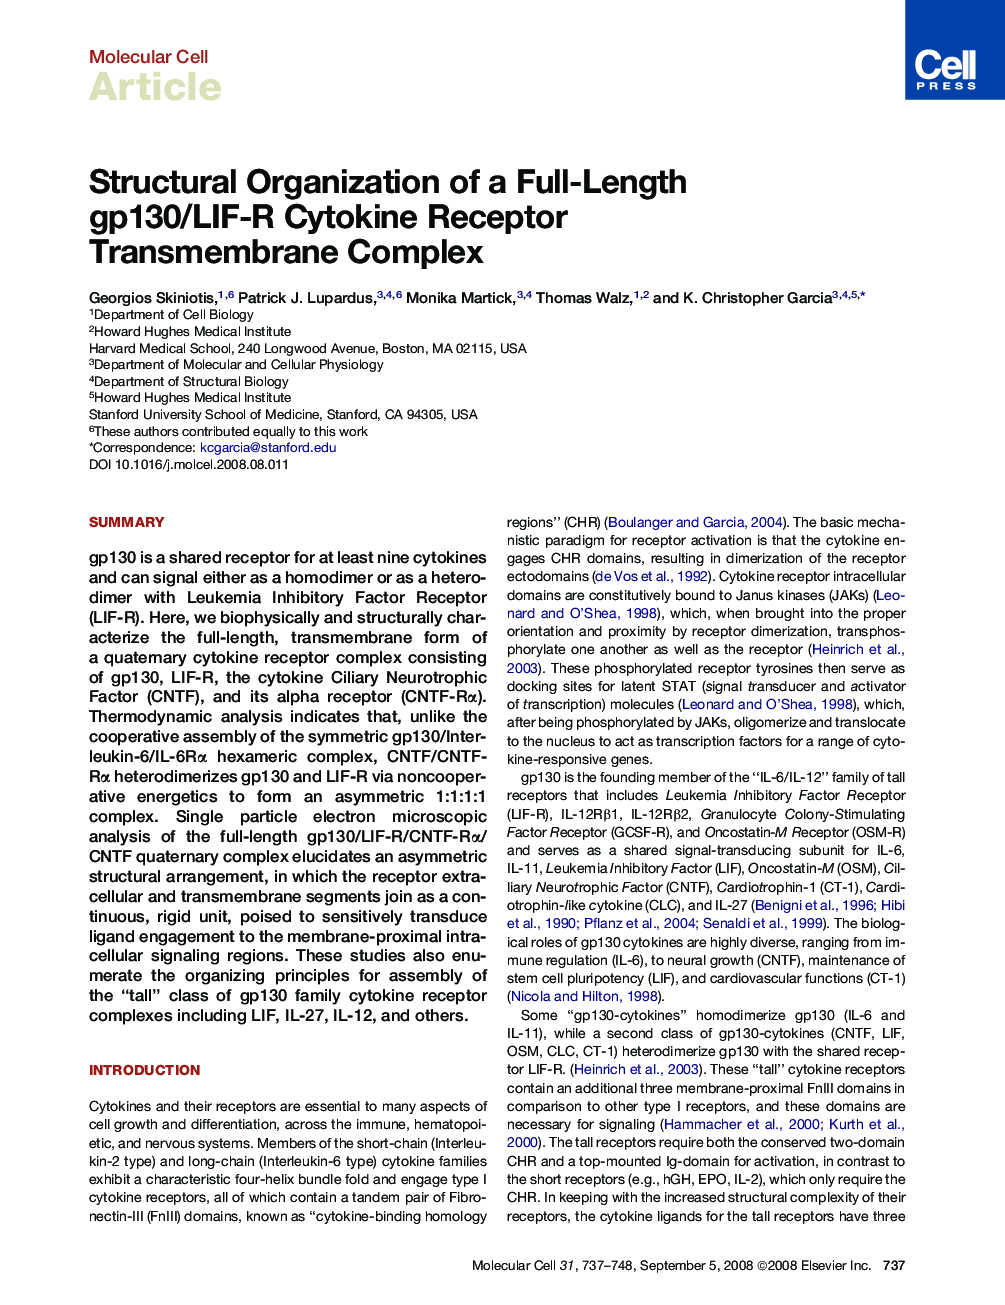 Structural Organization of a Full-Length gp130/LIF-R Cytokine Receptor Transmembrane Complex